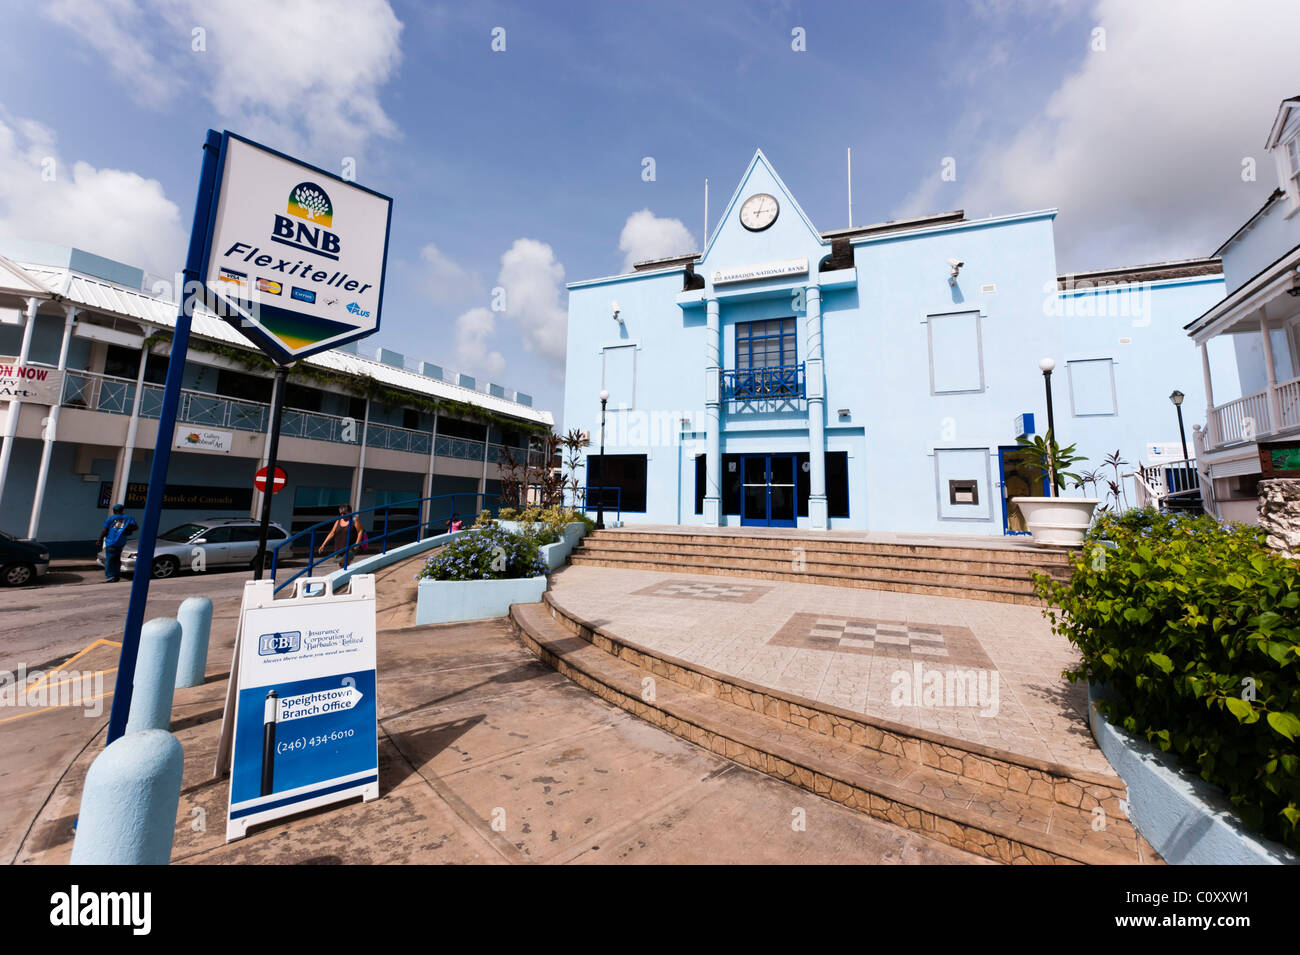 The Barbados International Bank branch Stock Photo